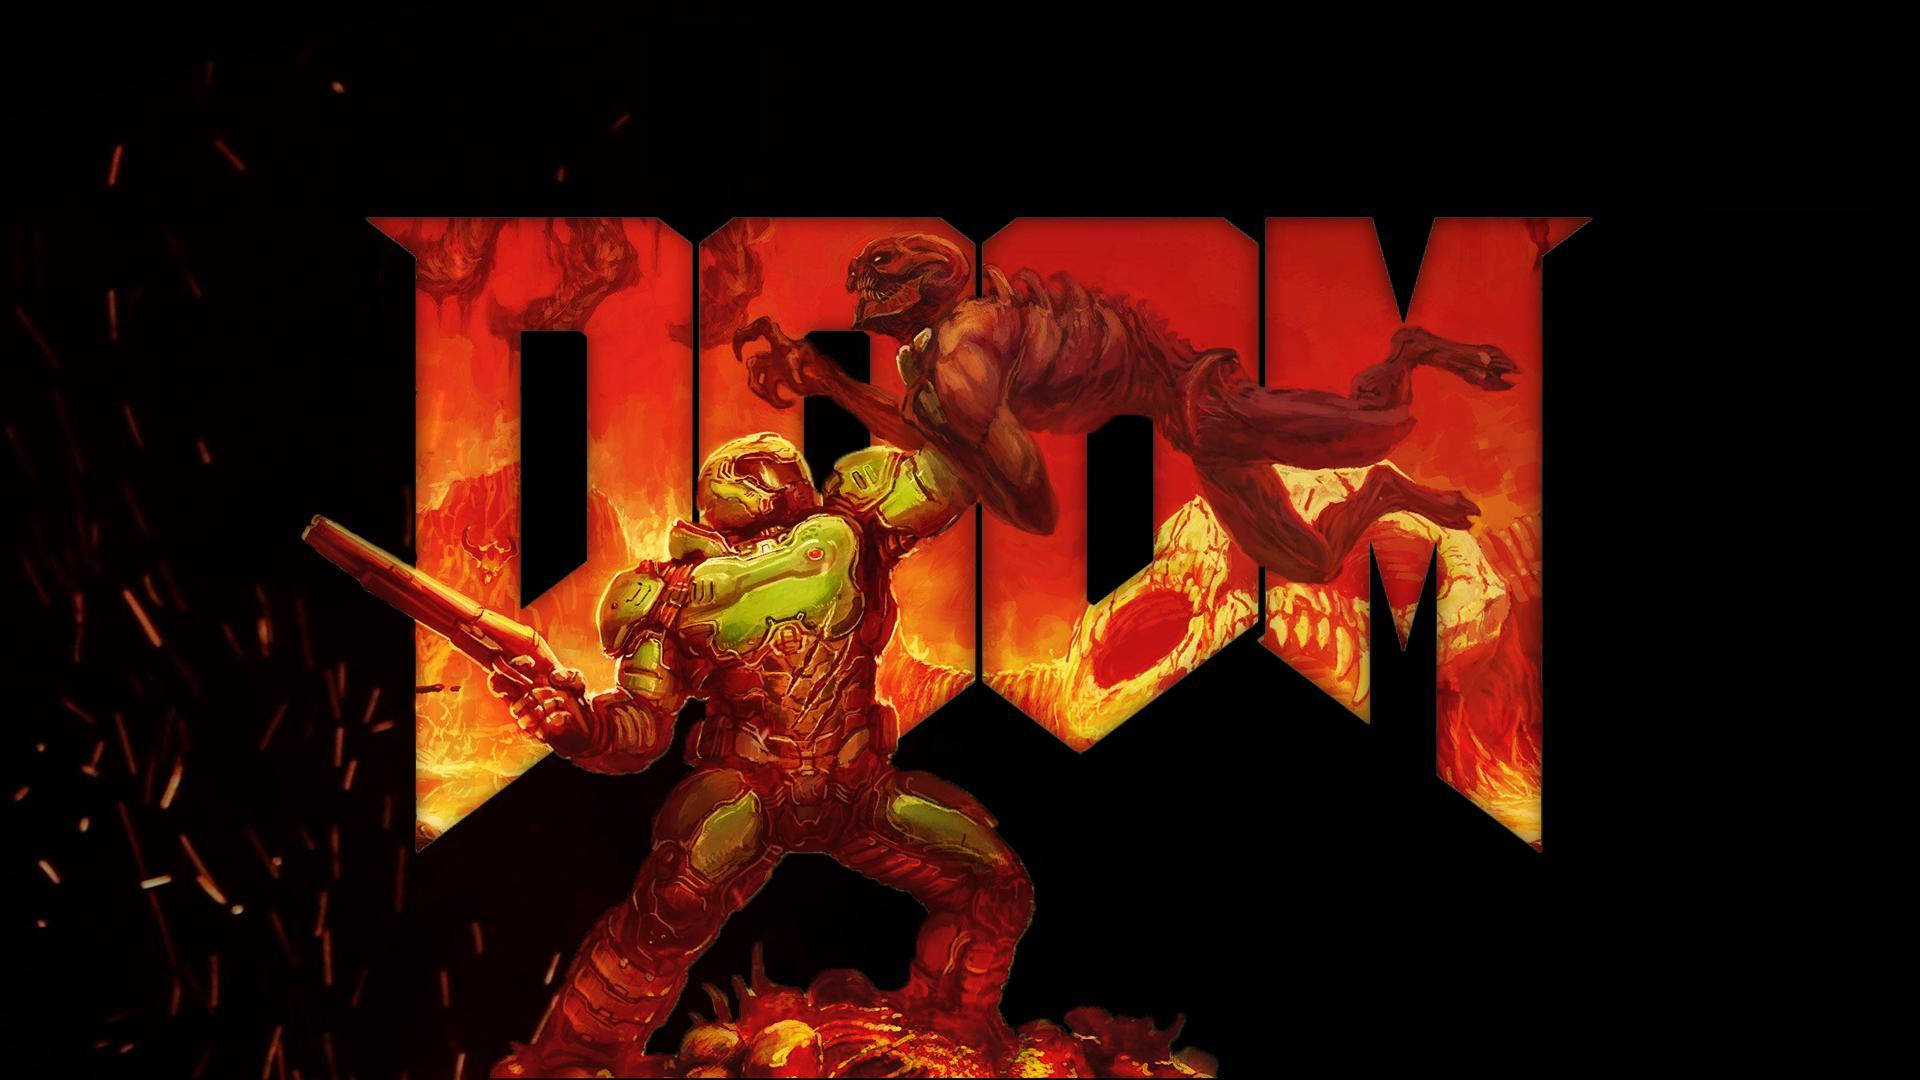 Doom Hd Game Title Wallpaper